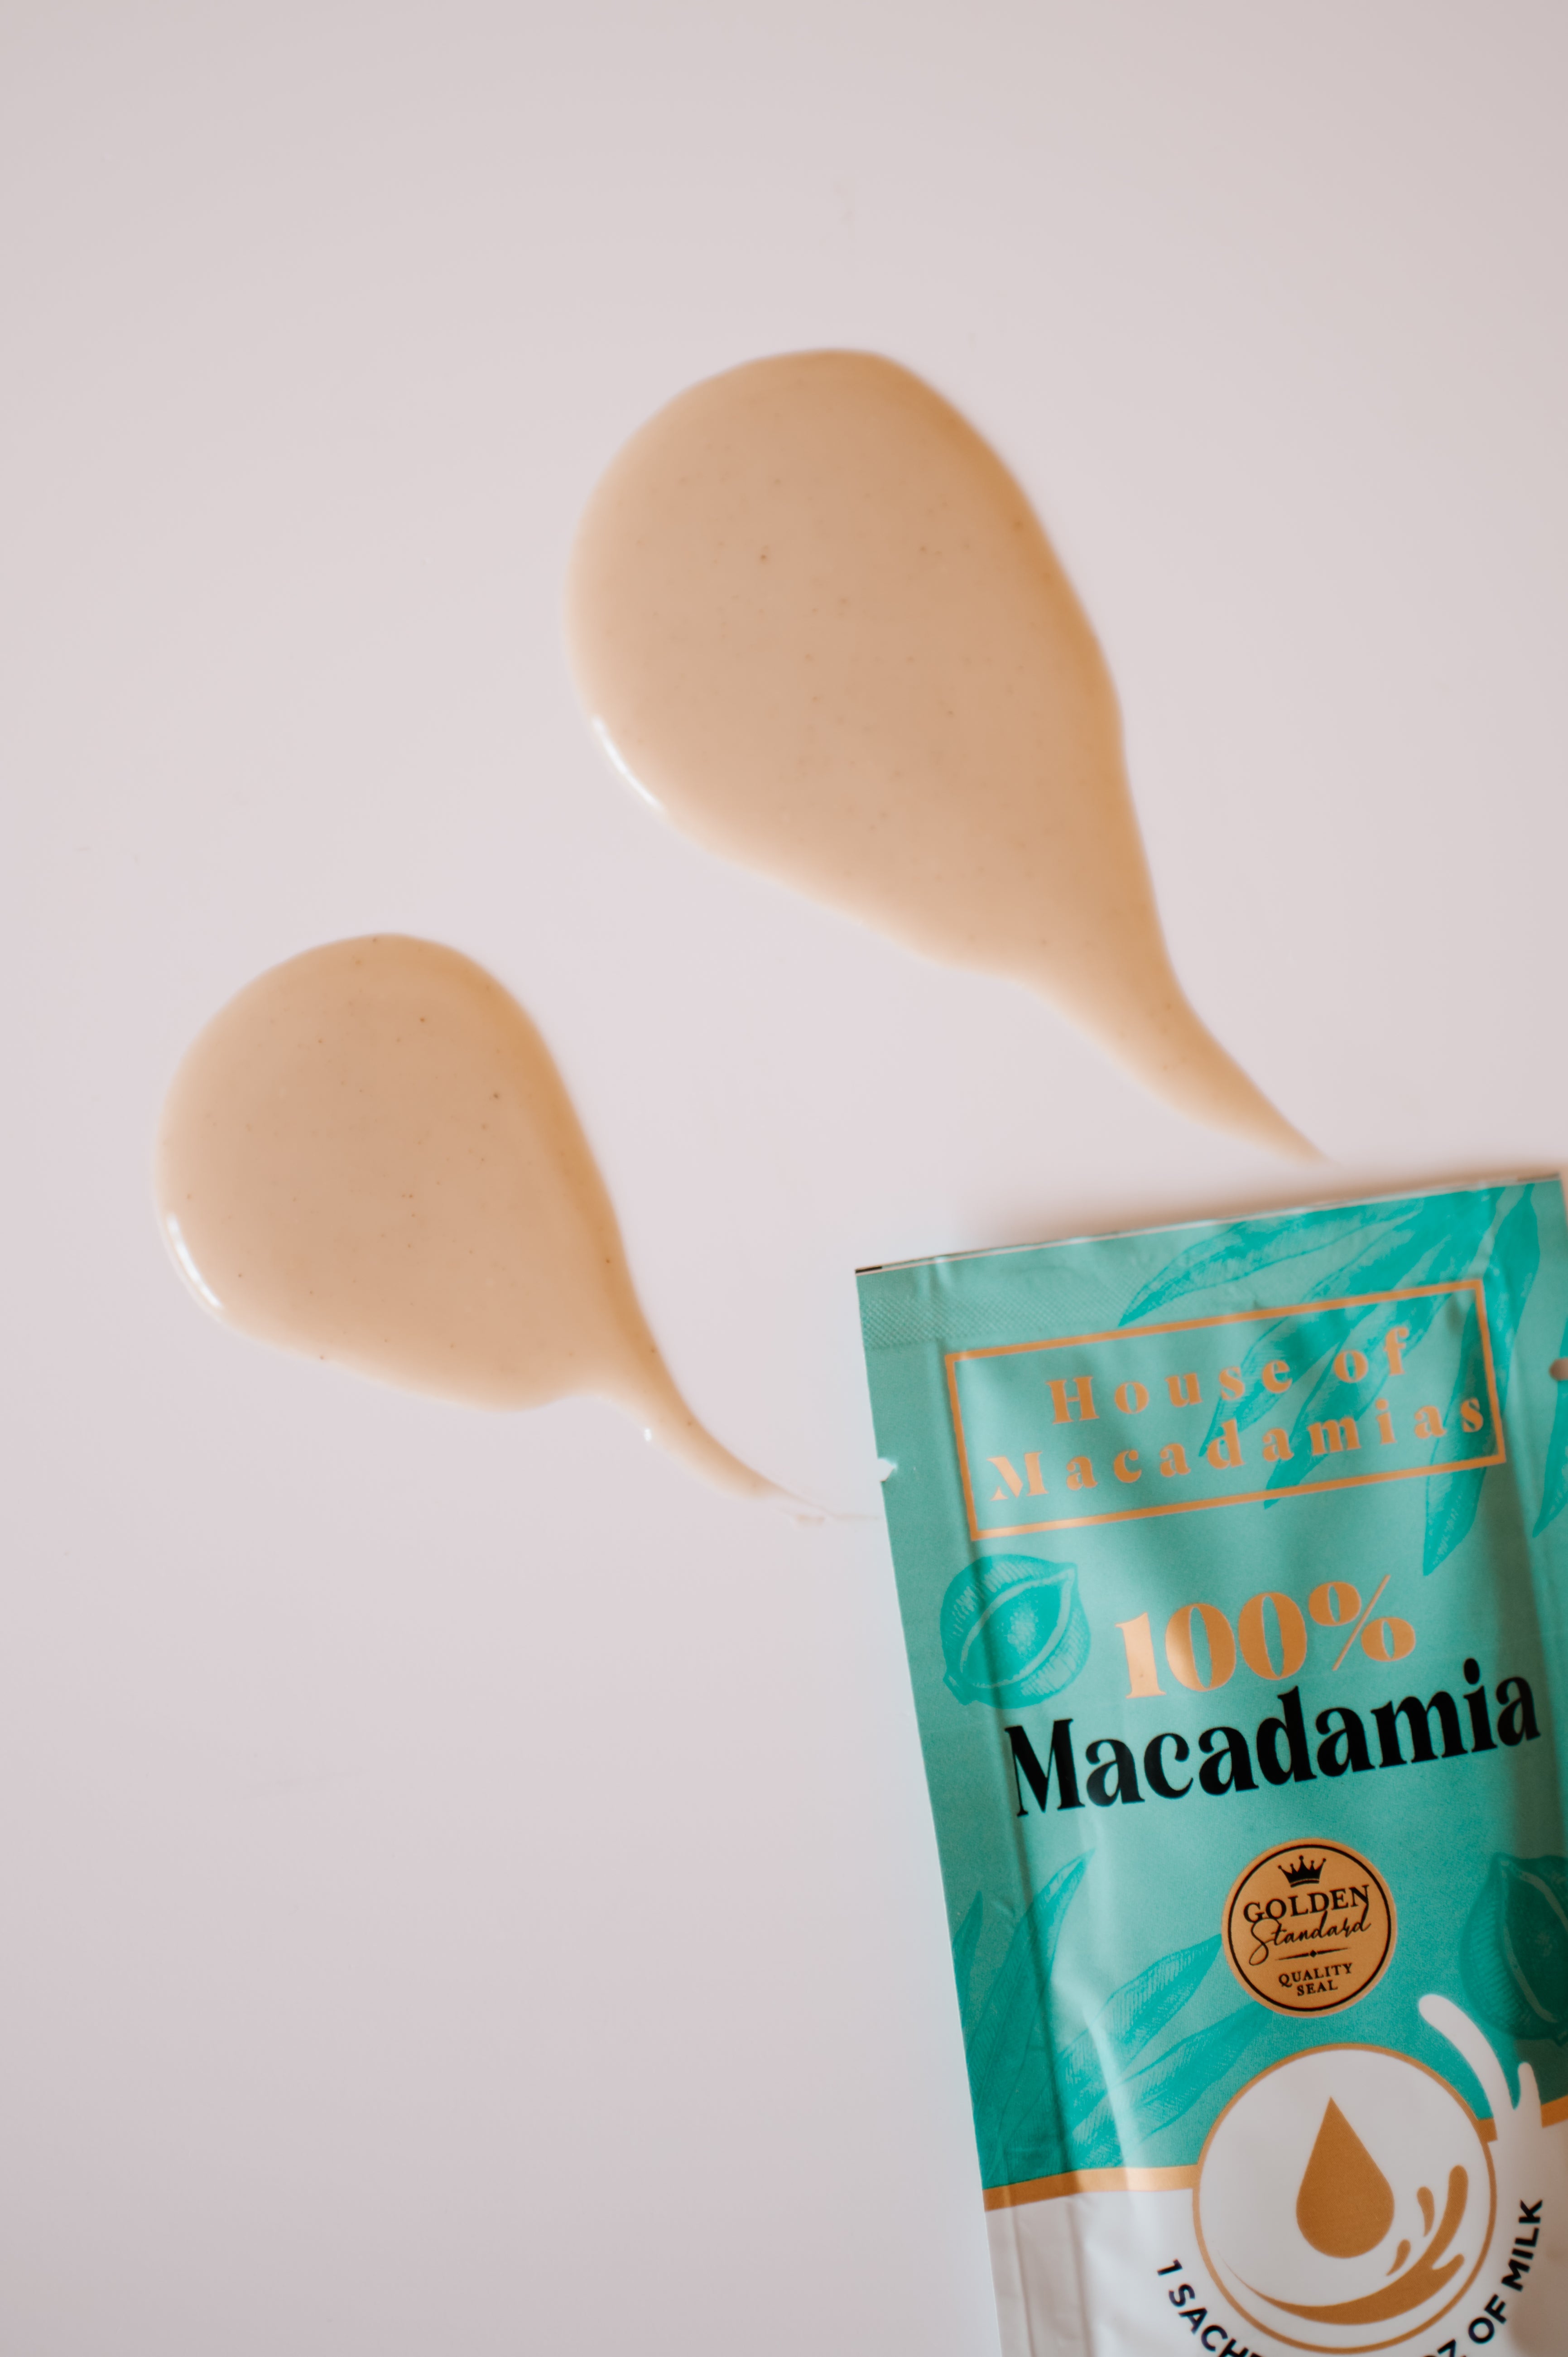 Exclusive Offer - 100% Macadamia Milk (12 Sachets)